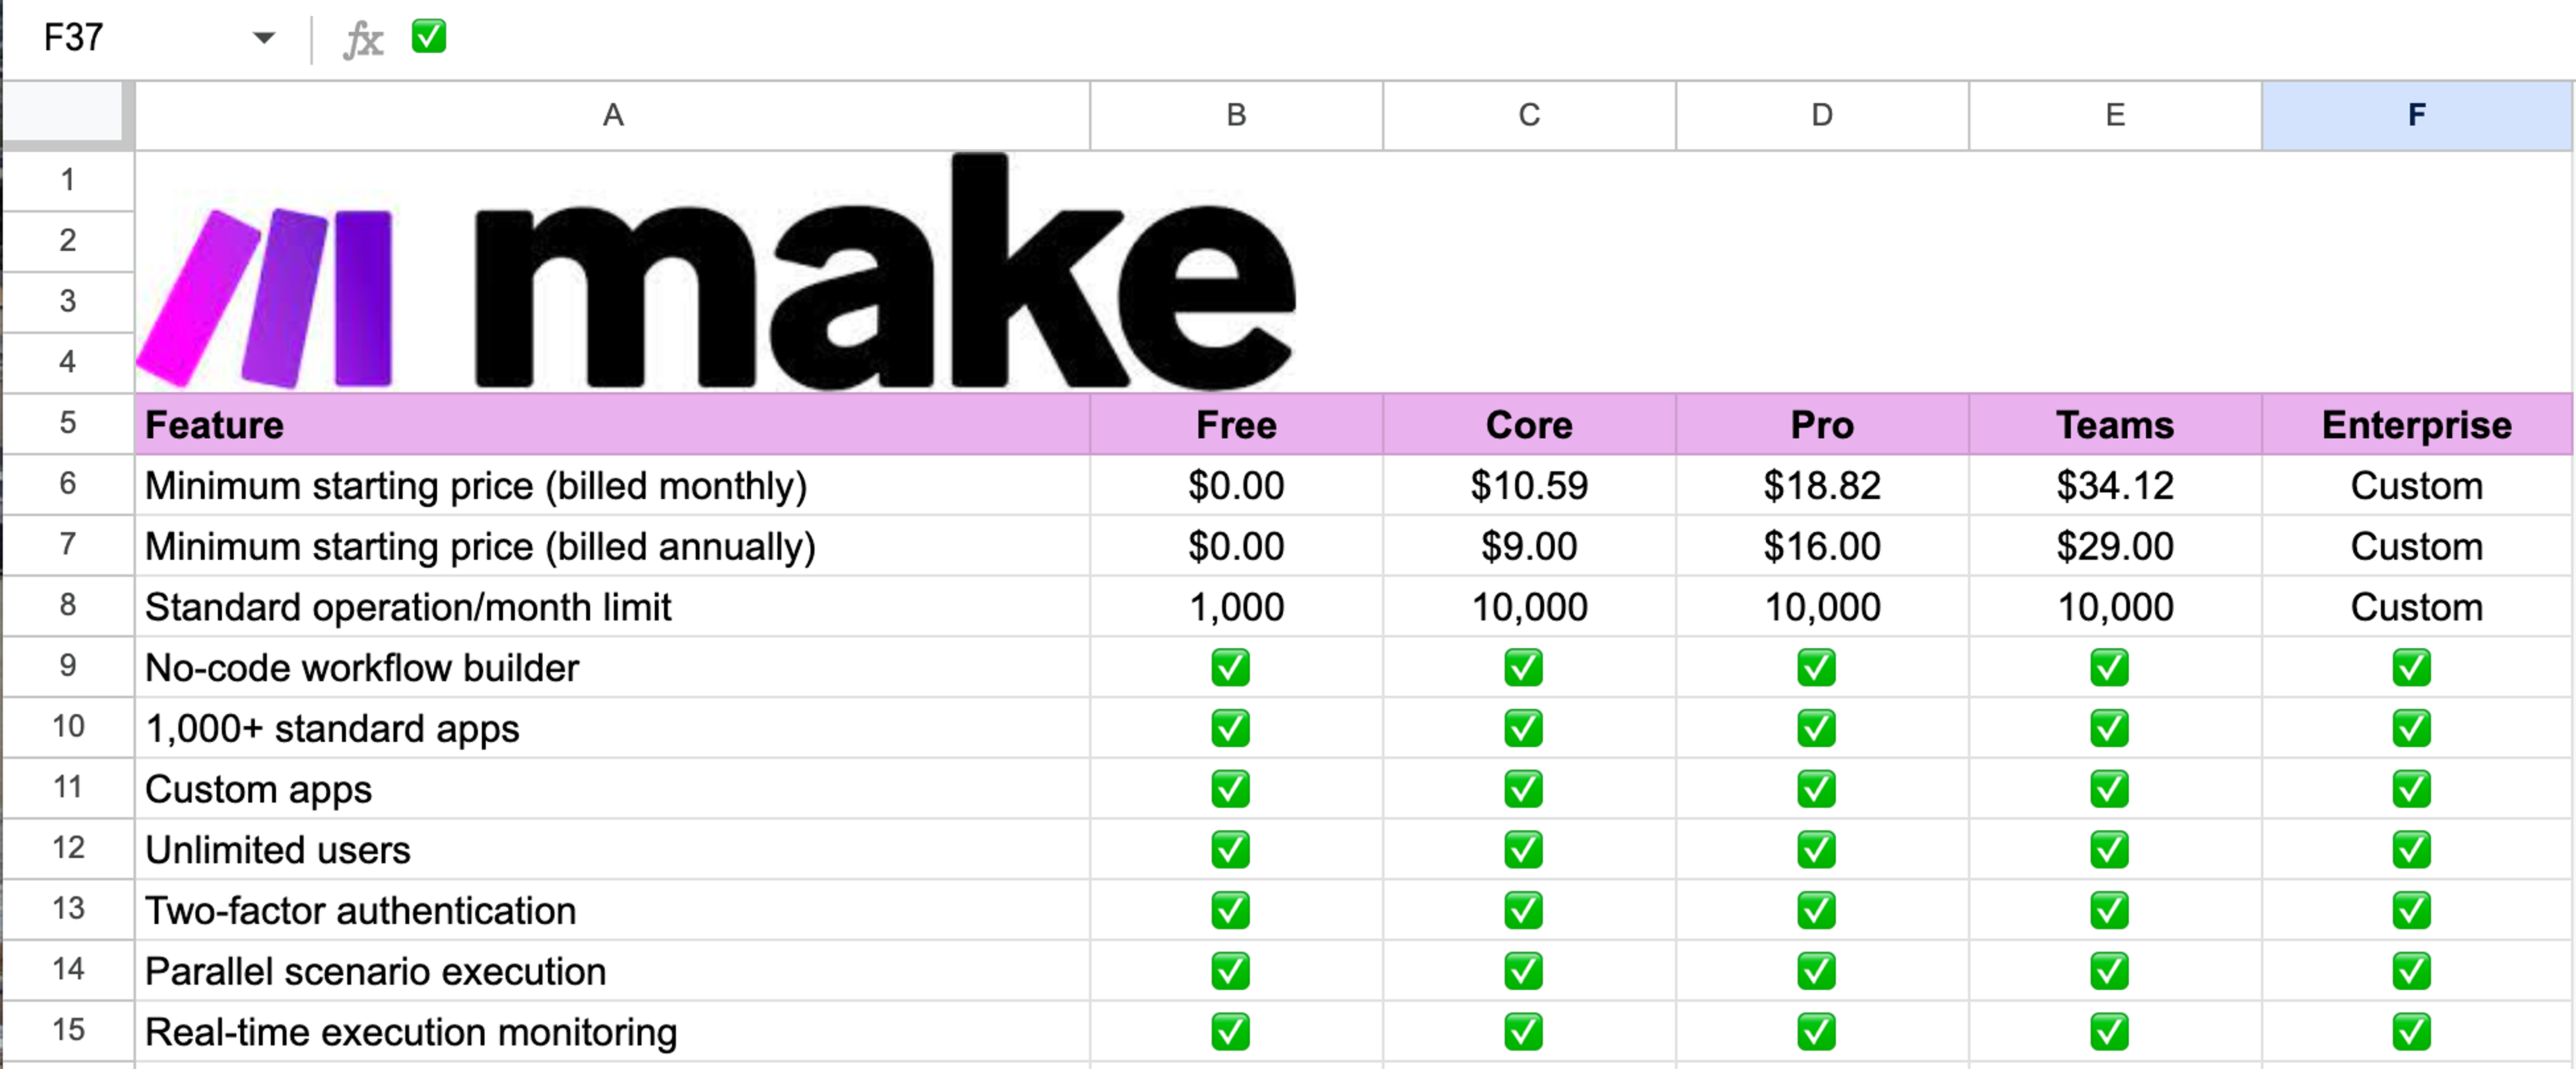 Relay pricing breakdown in Google Sheets spreadsheet